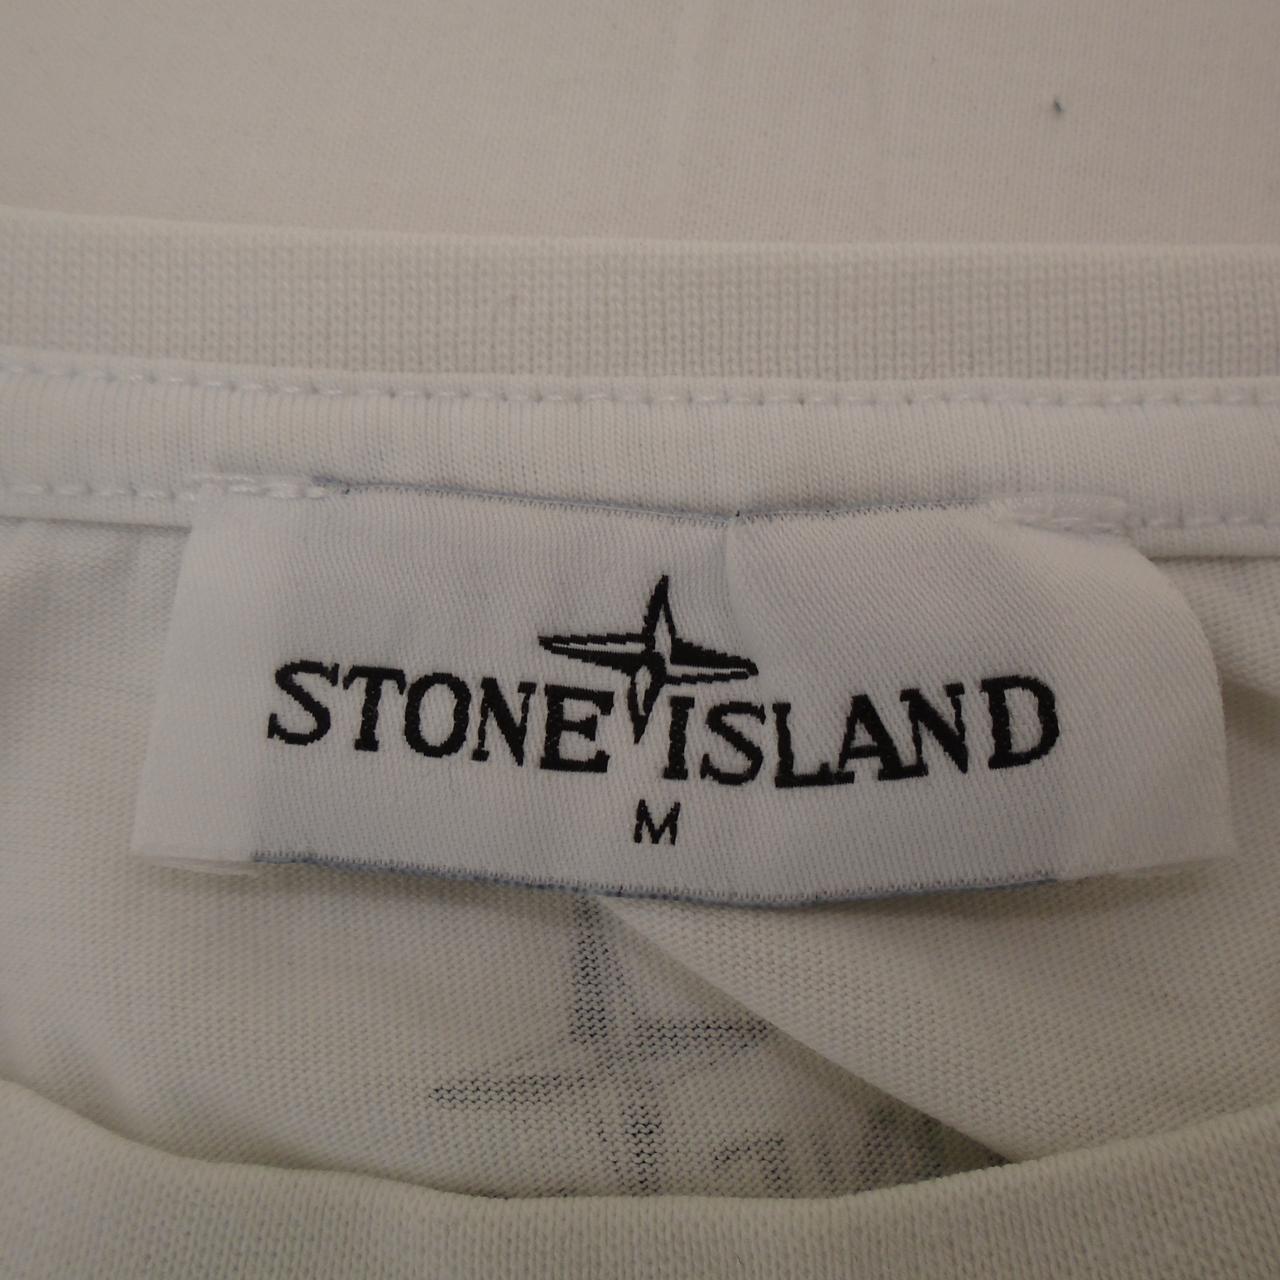 Men's T-Shirt Stone Island. White. M. Used. Very good